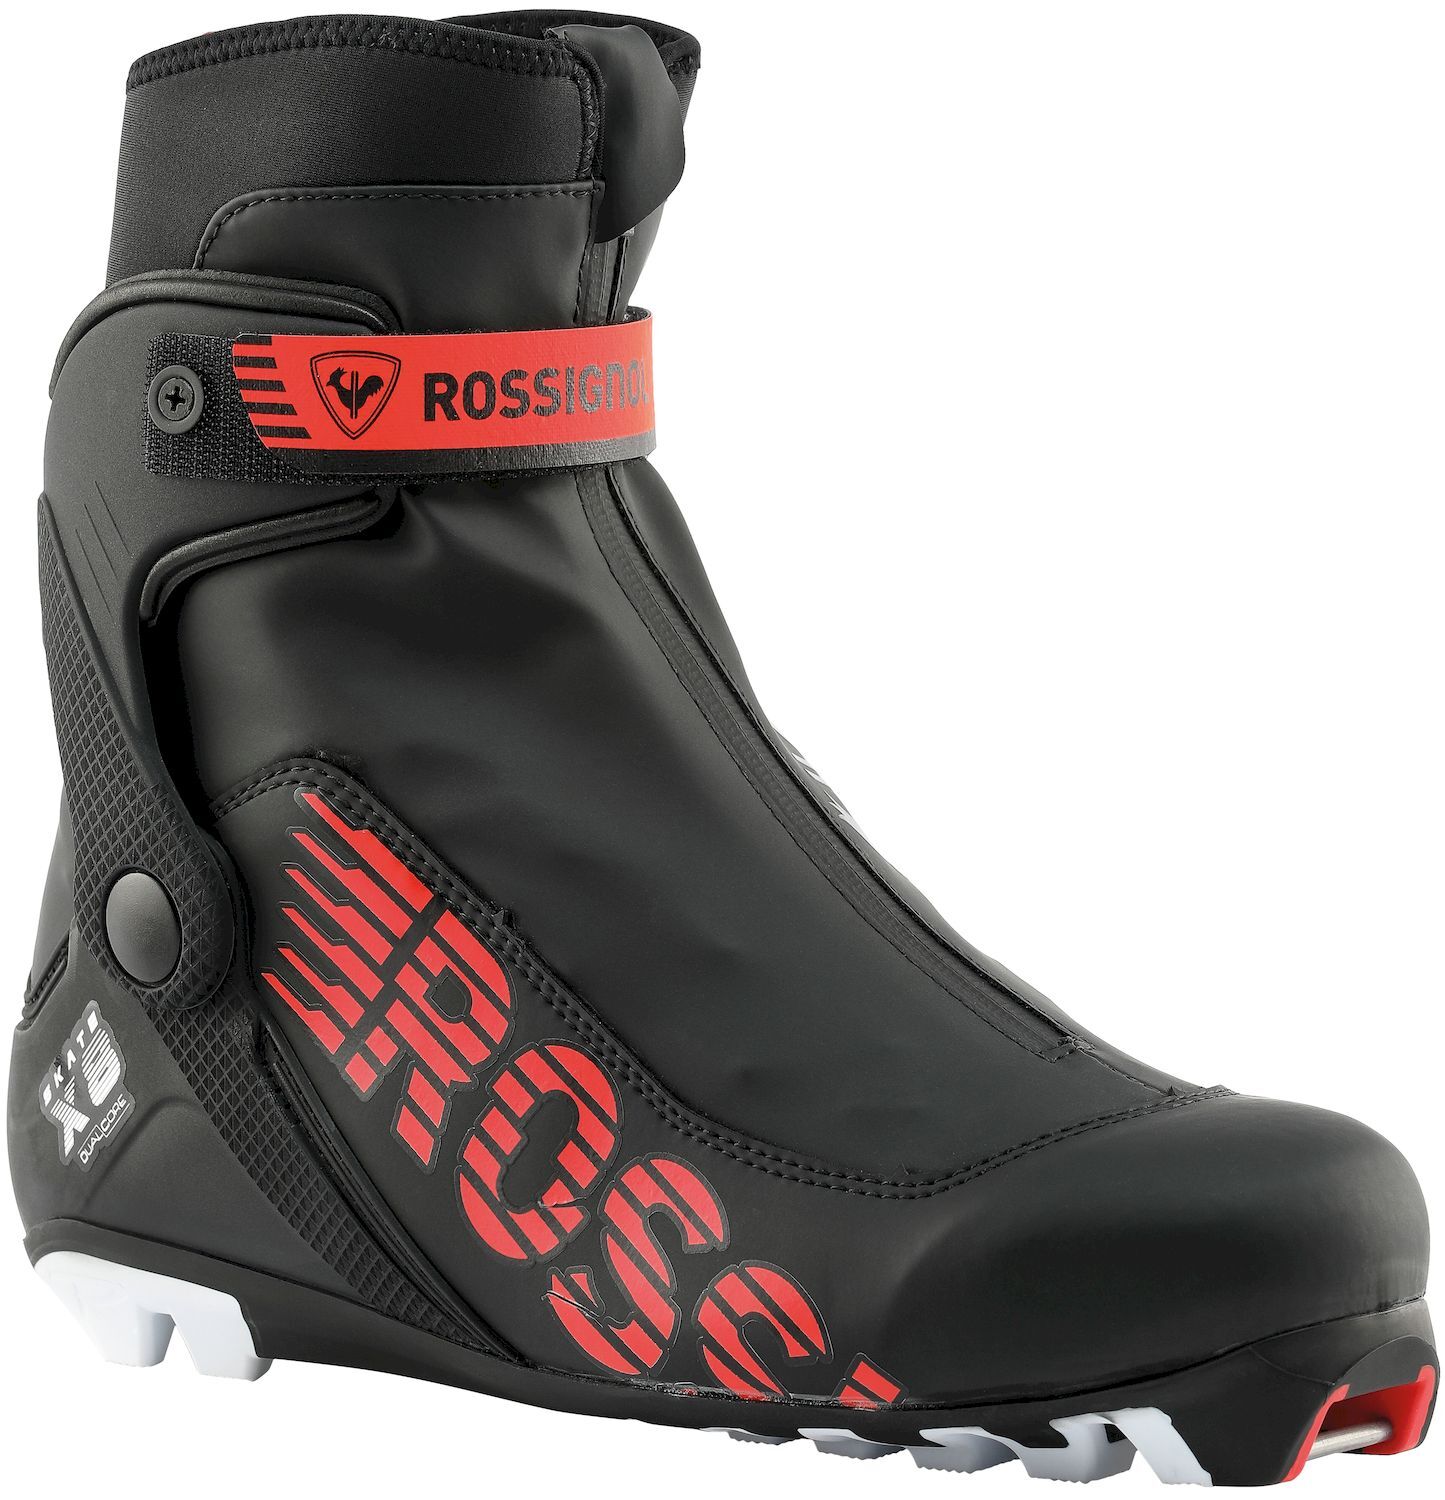 Rossignol X-8 Skate - Cross-country ski boots - Men's